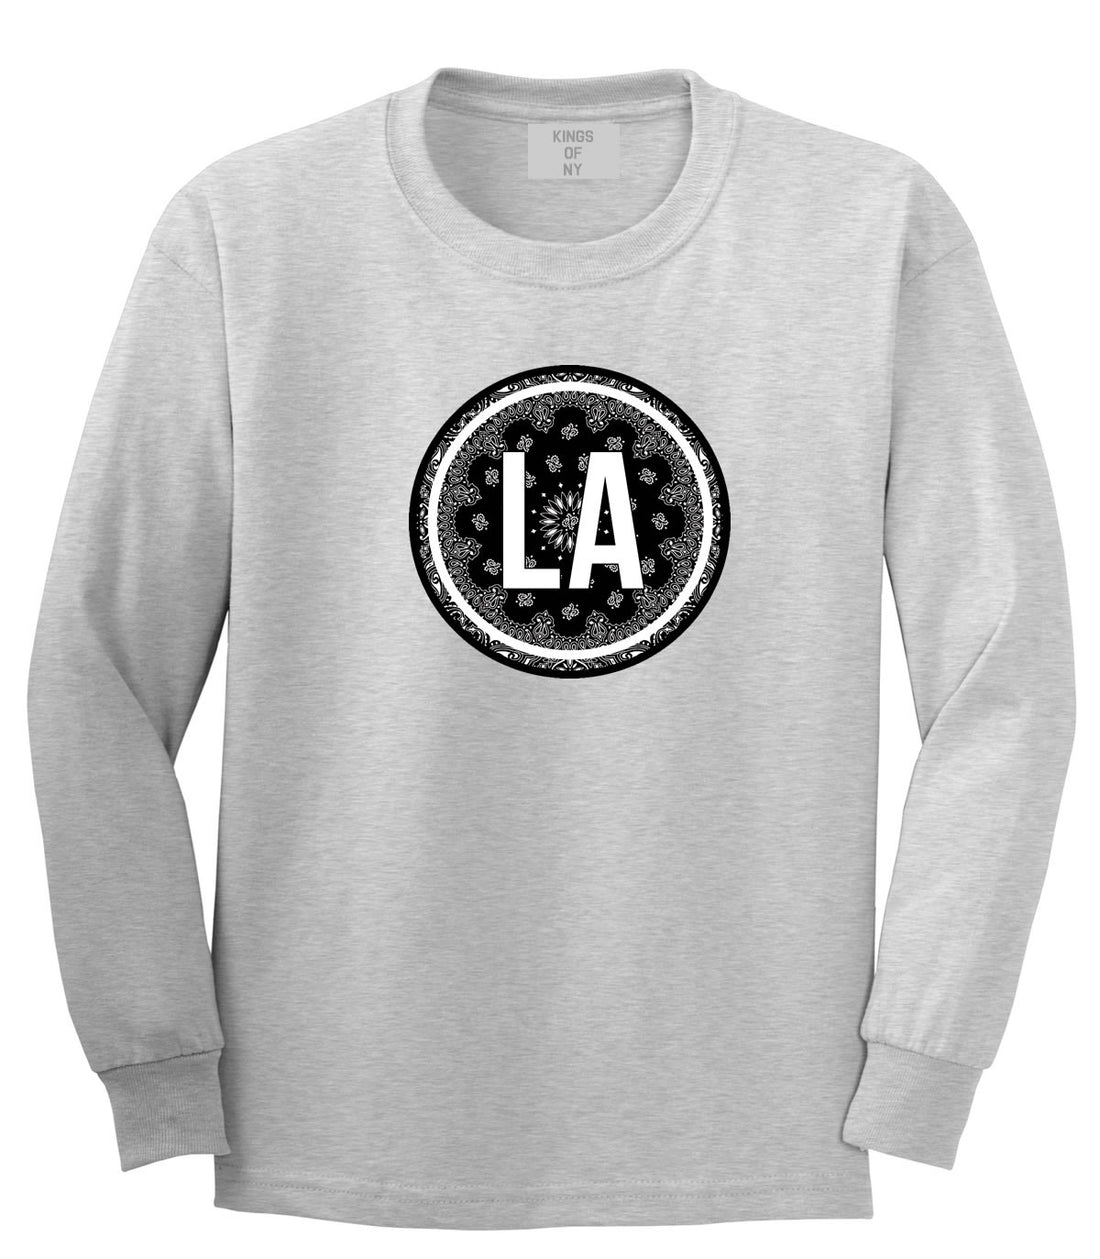 Kings Of NY La Los Angeles Cali California Bandana Long Sleeve T-Shirt in Grey